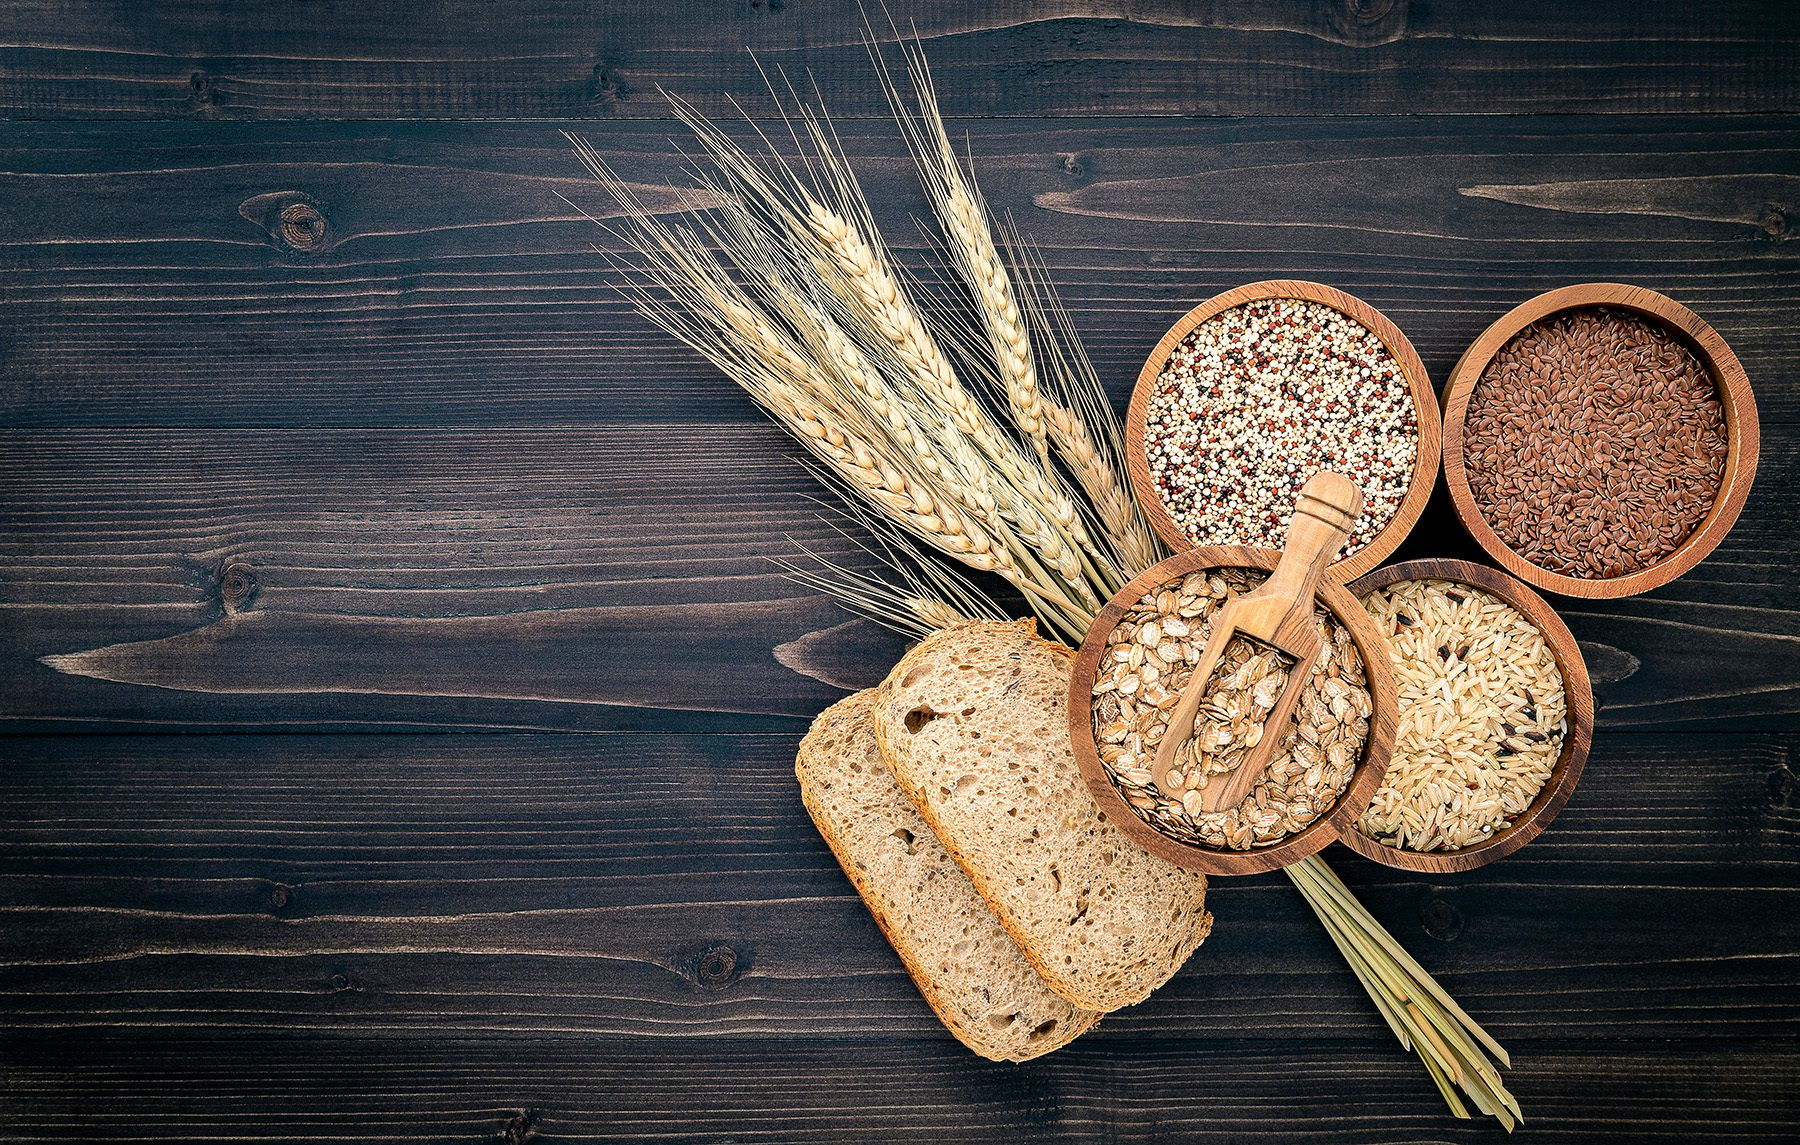 Wood, Wheat, Bread, Bowls of grain